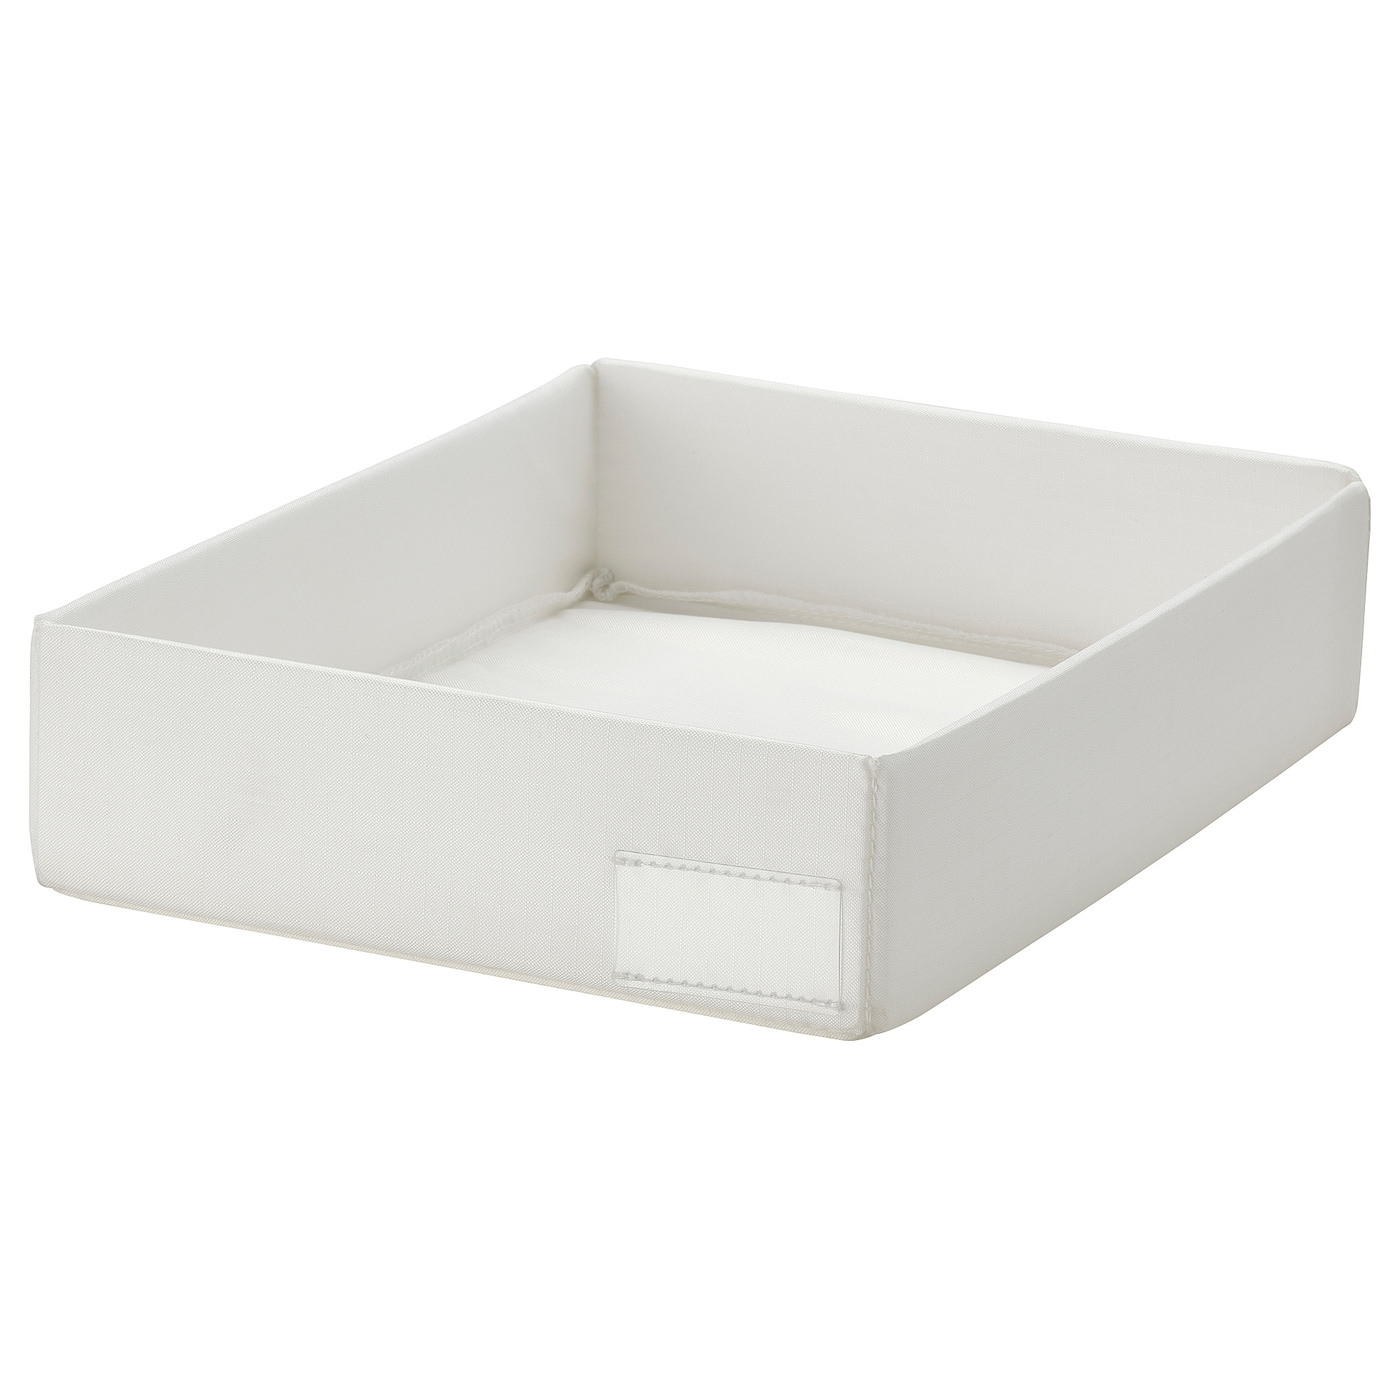 STUK СТУК Органайзер, белый, 26x20x6 см IKEA stuk стук органайзер белый 26x20x6 см ikea